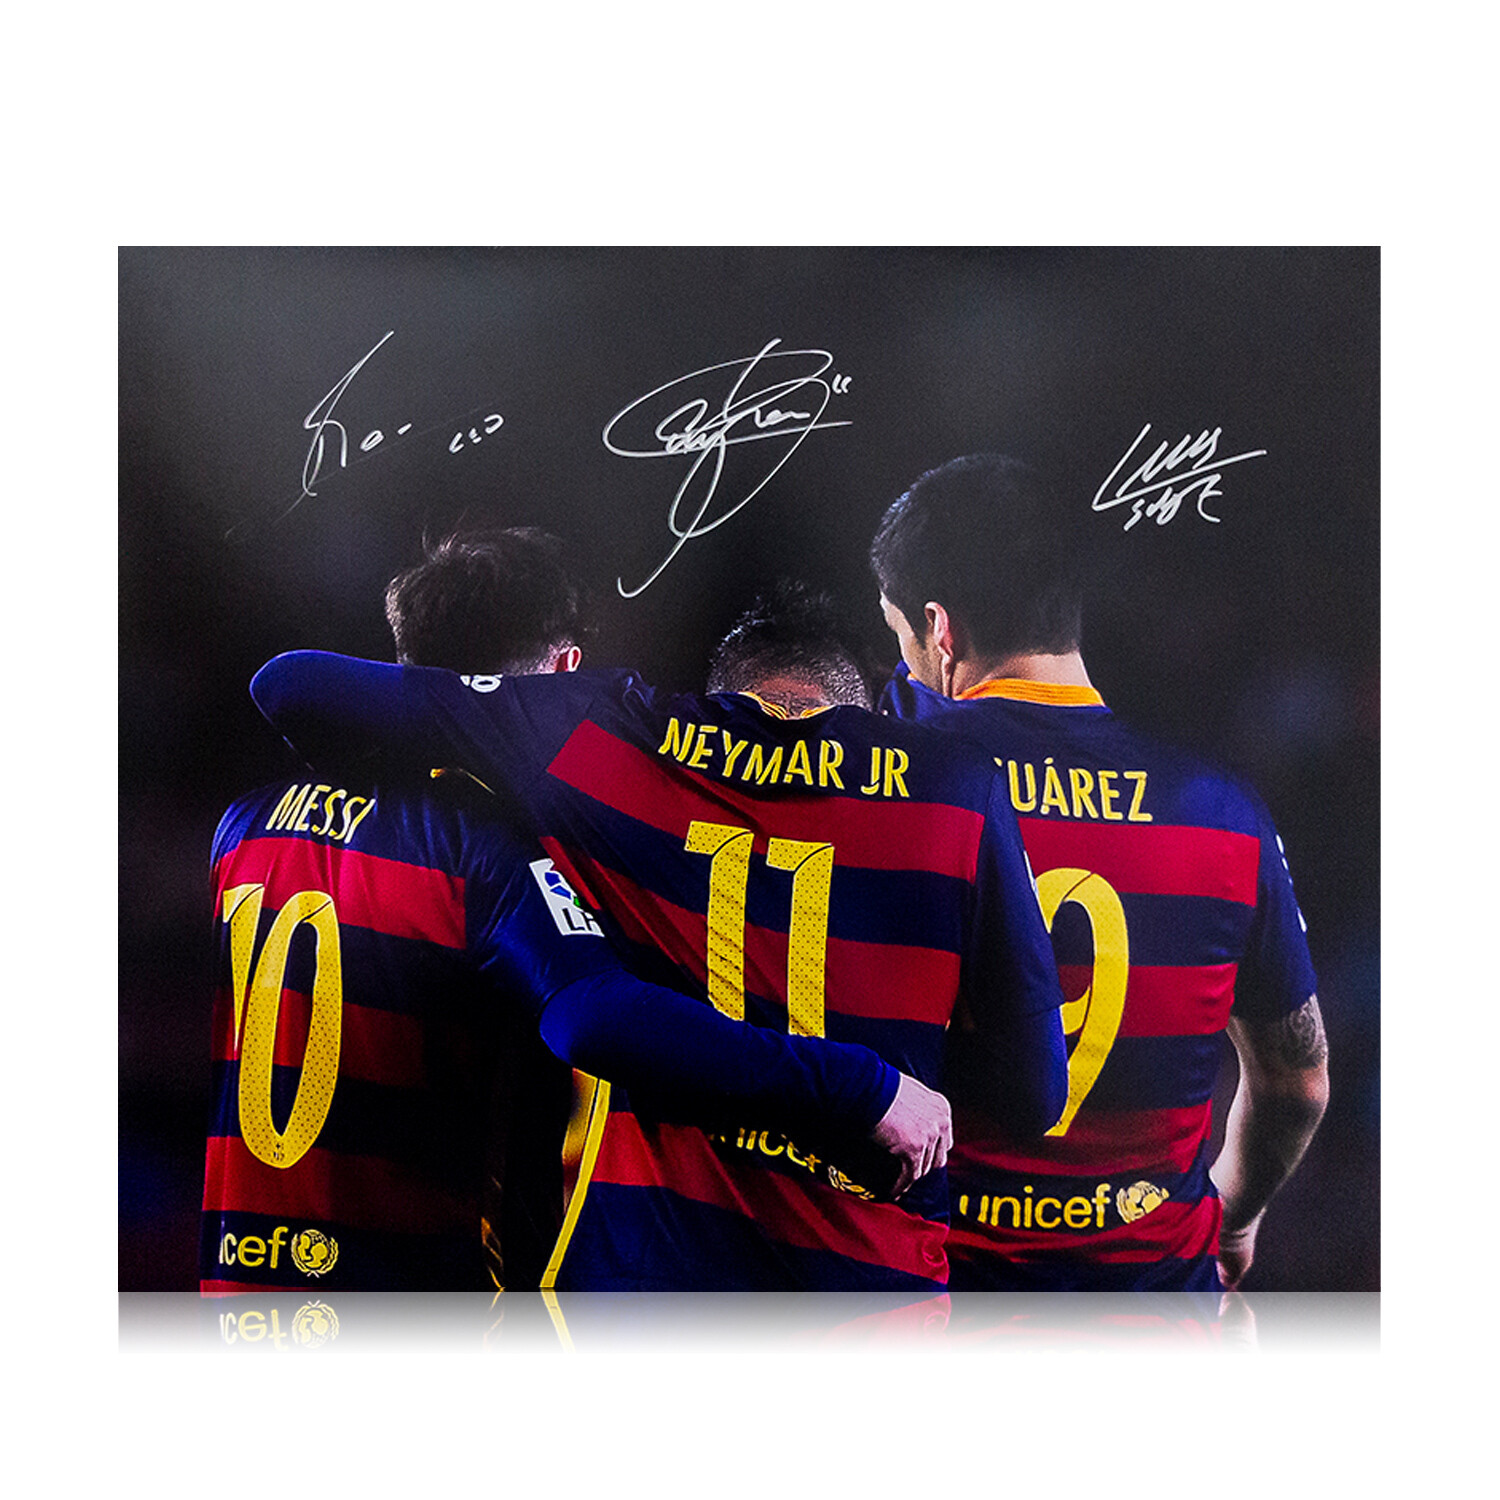 Messi, Neymar Jr & Suarez “Ultimate Front Three” Print